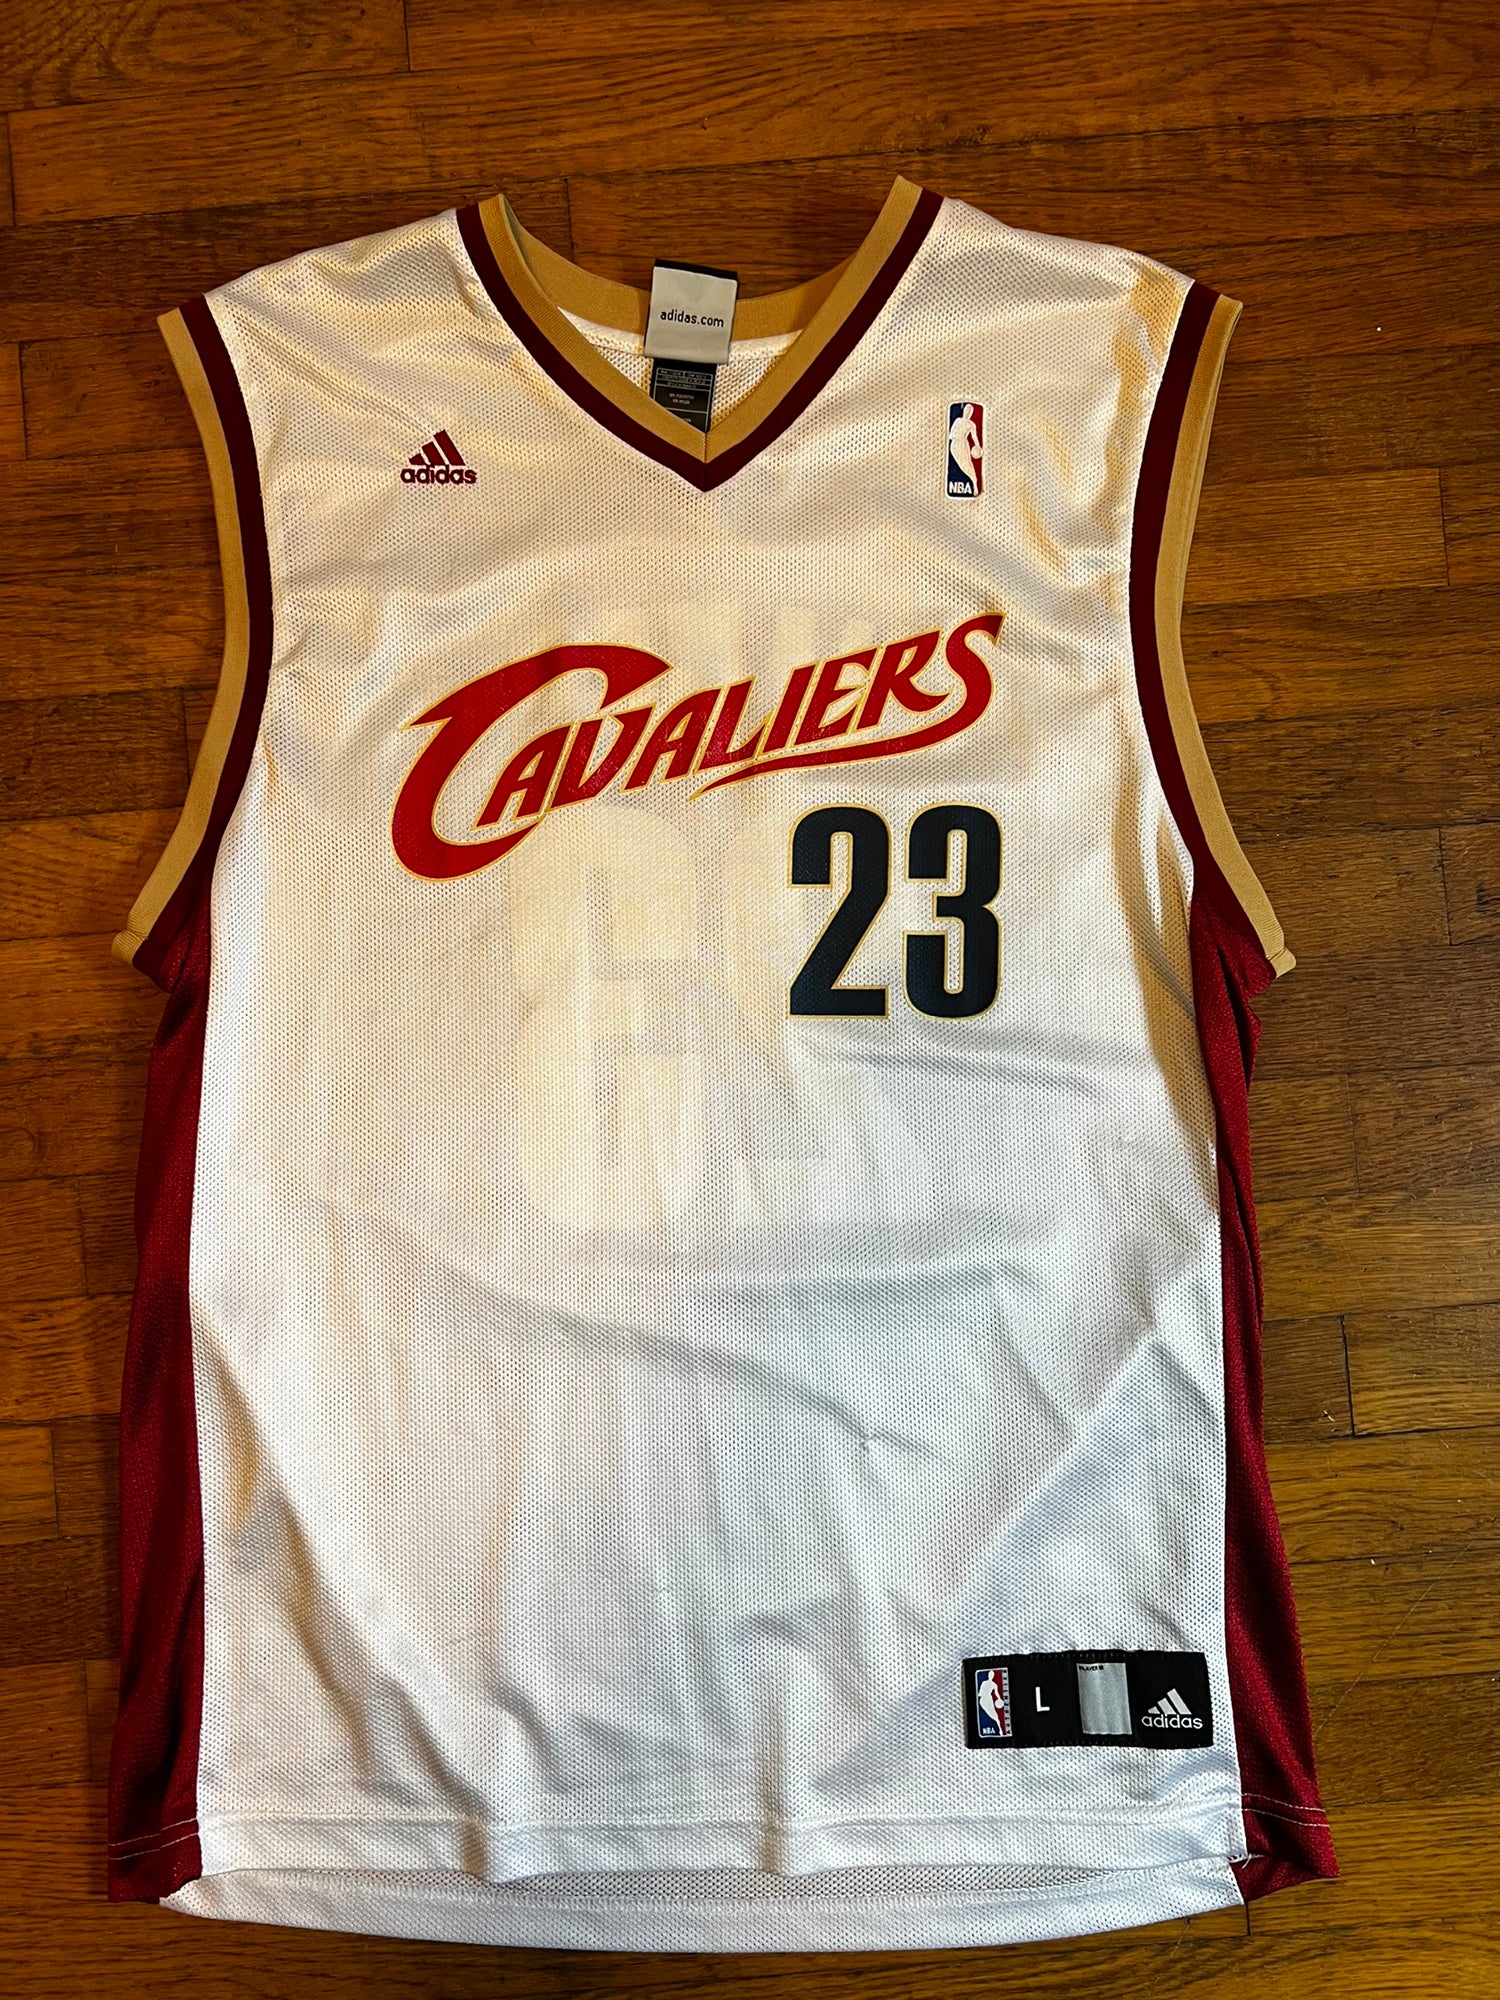 Preowned adidas NBA Miami Heat #6 Lebron James Jersey Size Large R1